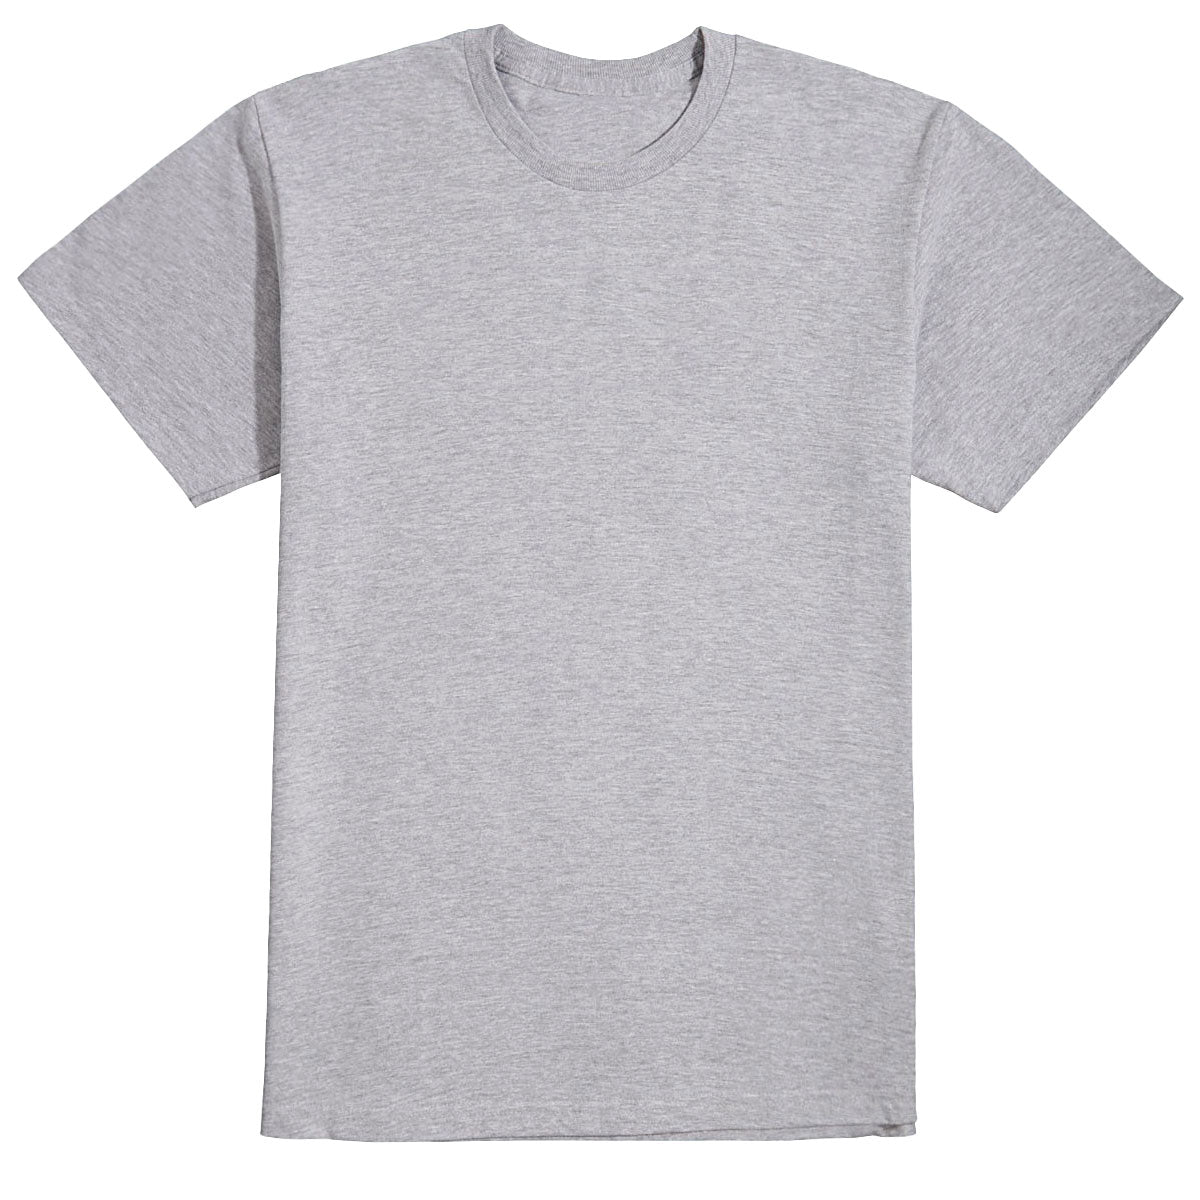 Converse Flash Sheet T-Shirt - Heather Grey - LG image 1